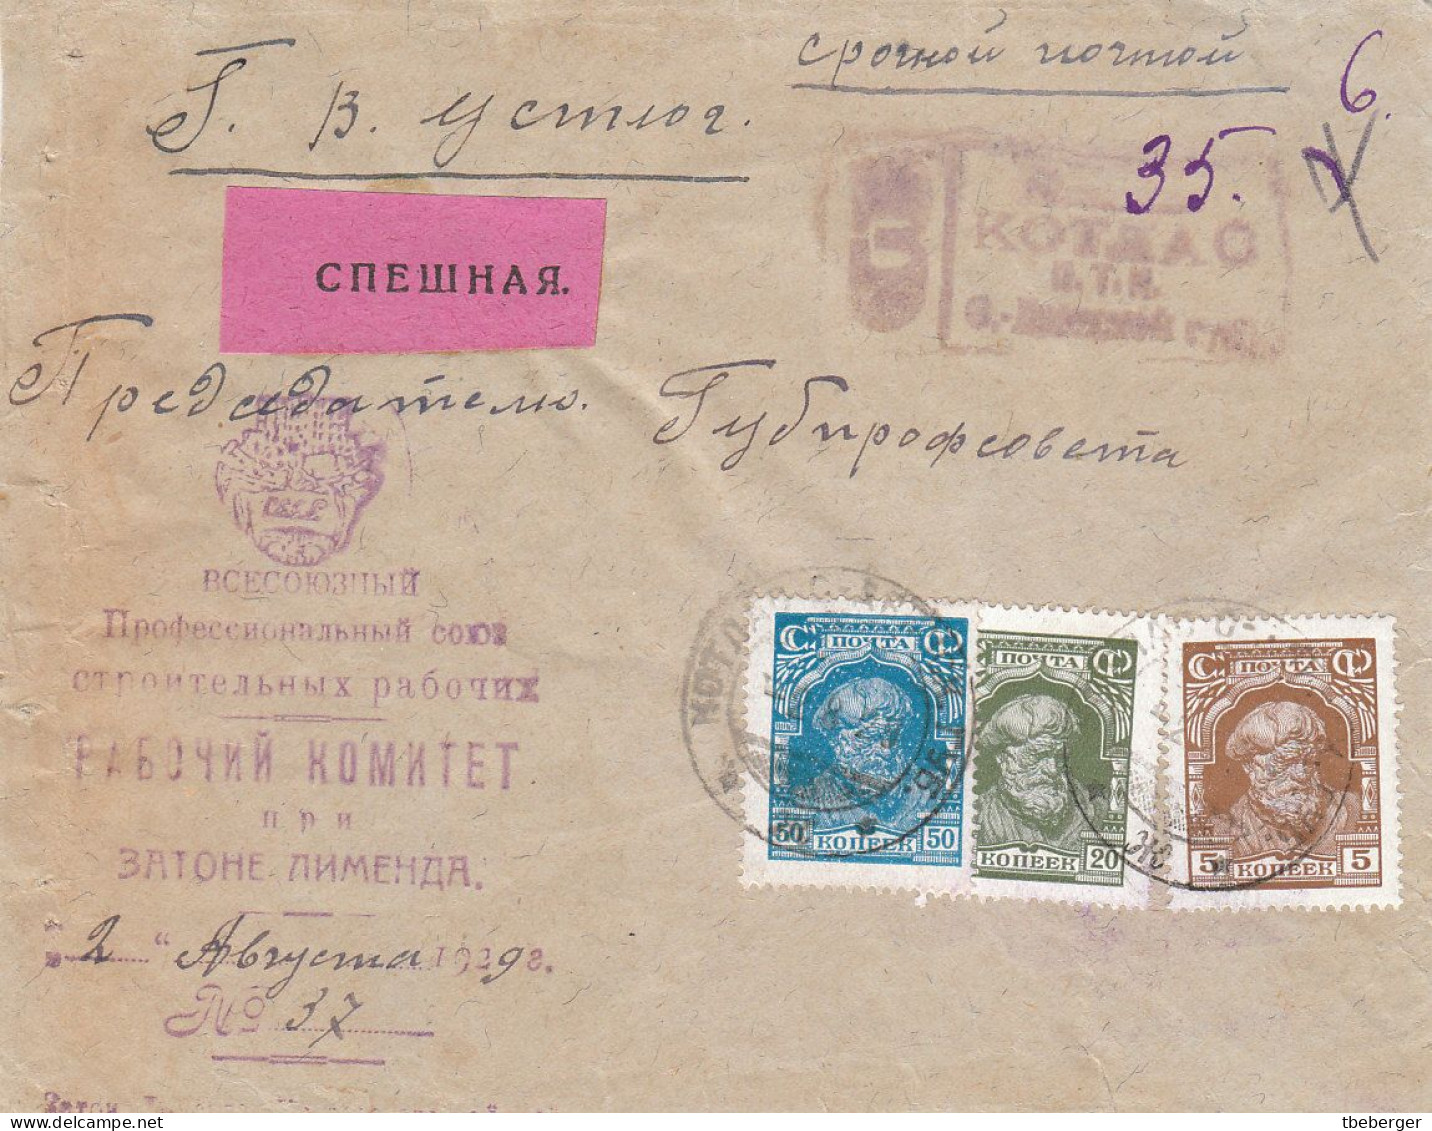 Russia USSR White Sea 1929 Special Post Express Mail KOTLAS North Dvina Gub To VELIKI-USTYUG Vologda, Ex Miskin (44) - Lettres & Documents